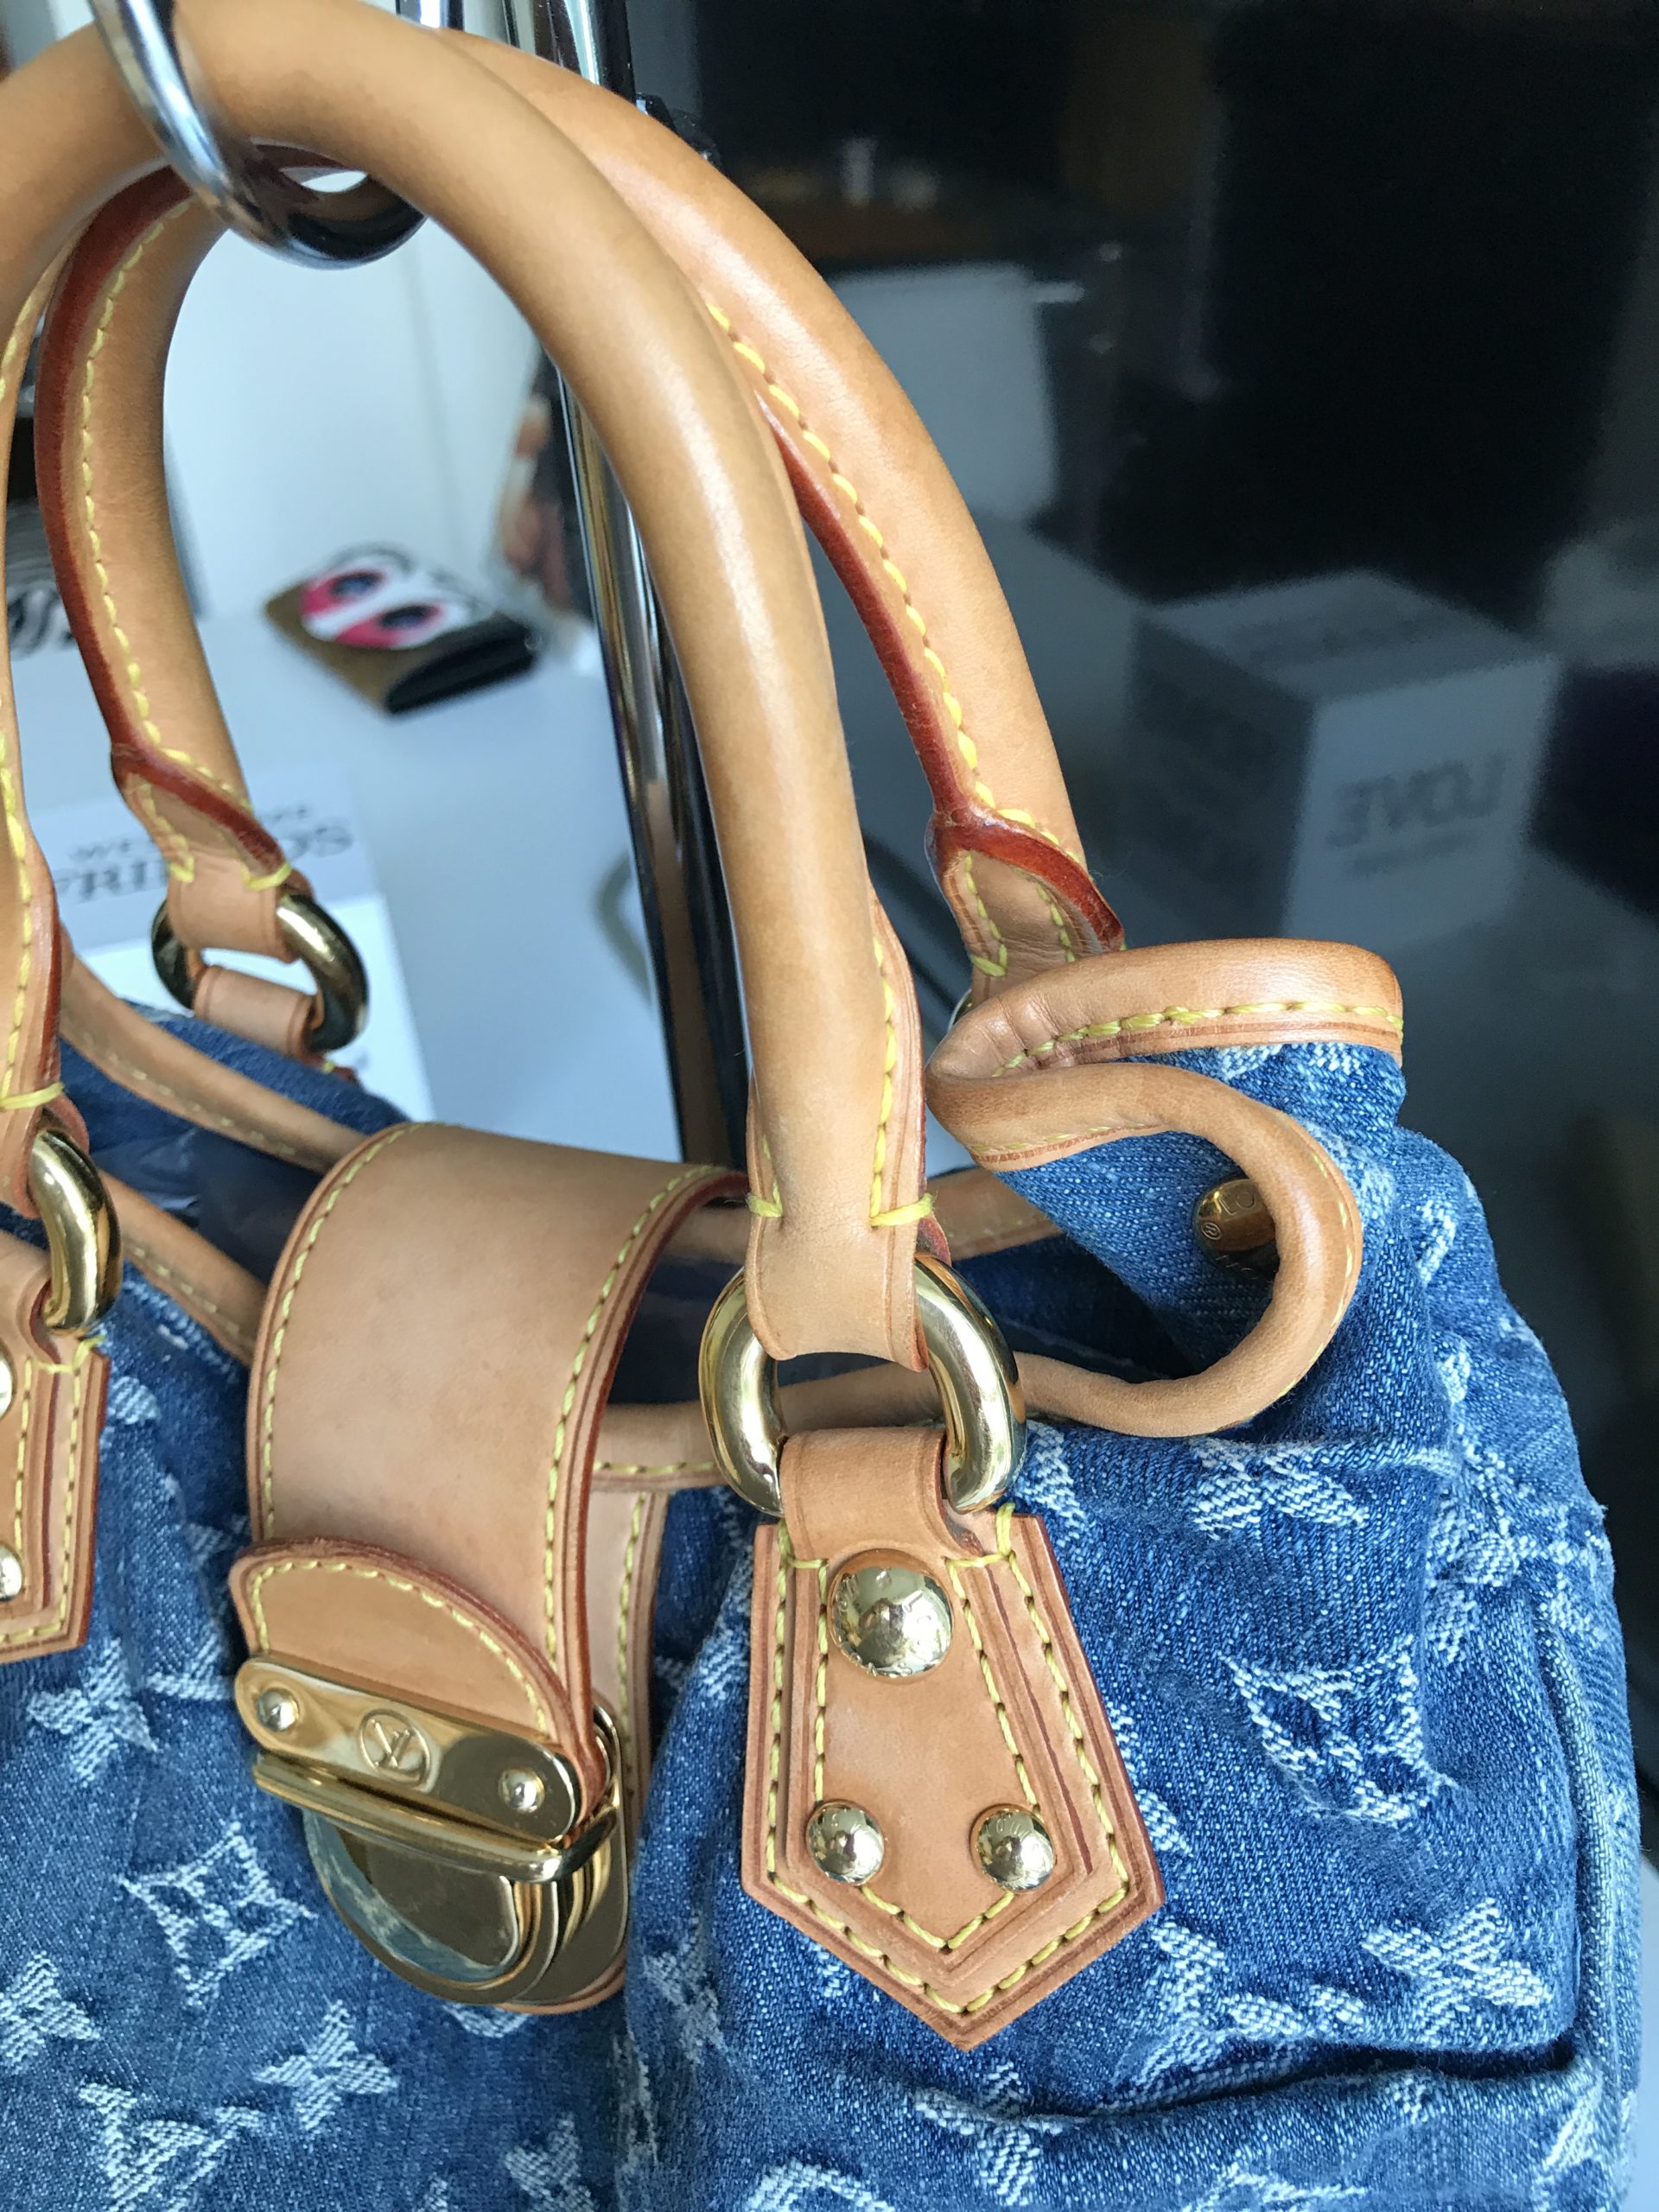 Genuine Louis Vuitton blue denim Plenty M95020 monogram handbag purse